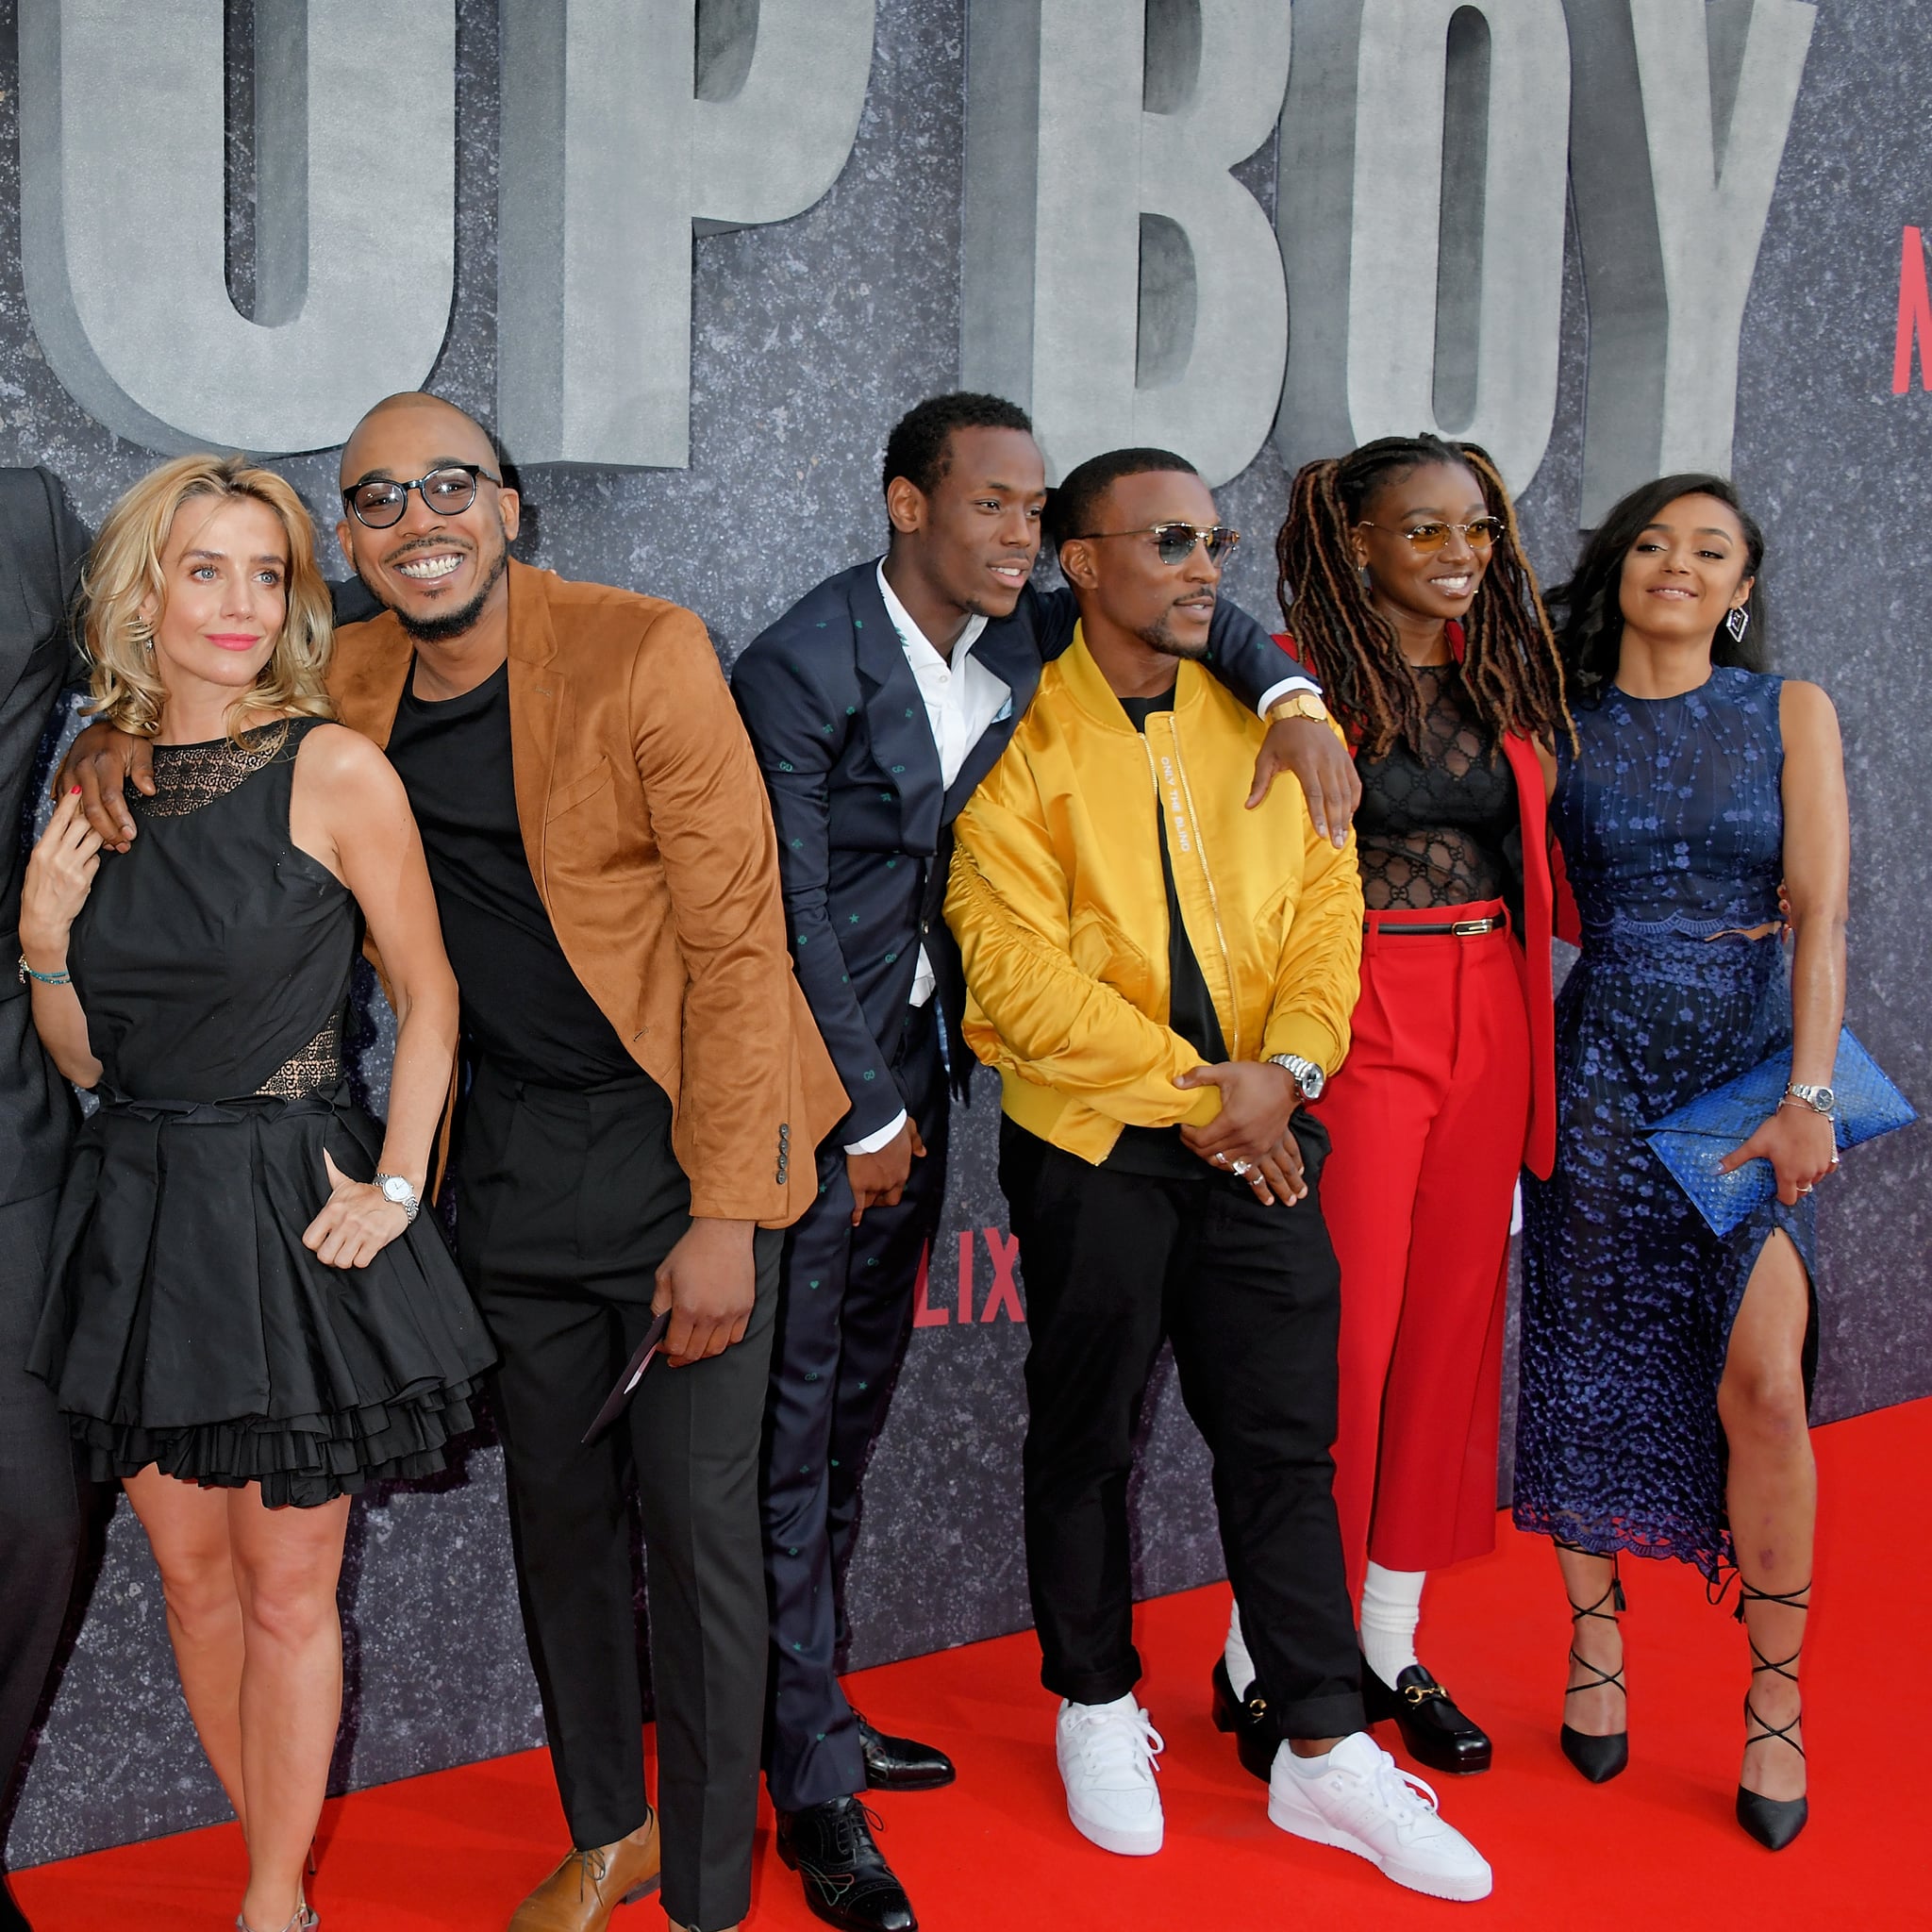 Top Boy Cast: Who's Who in Season 3 of the UK Drama - Netflix Tudum